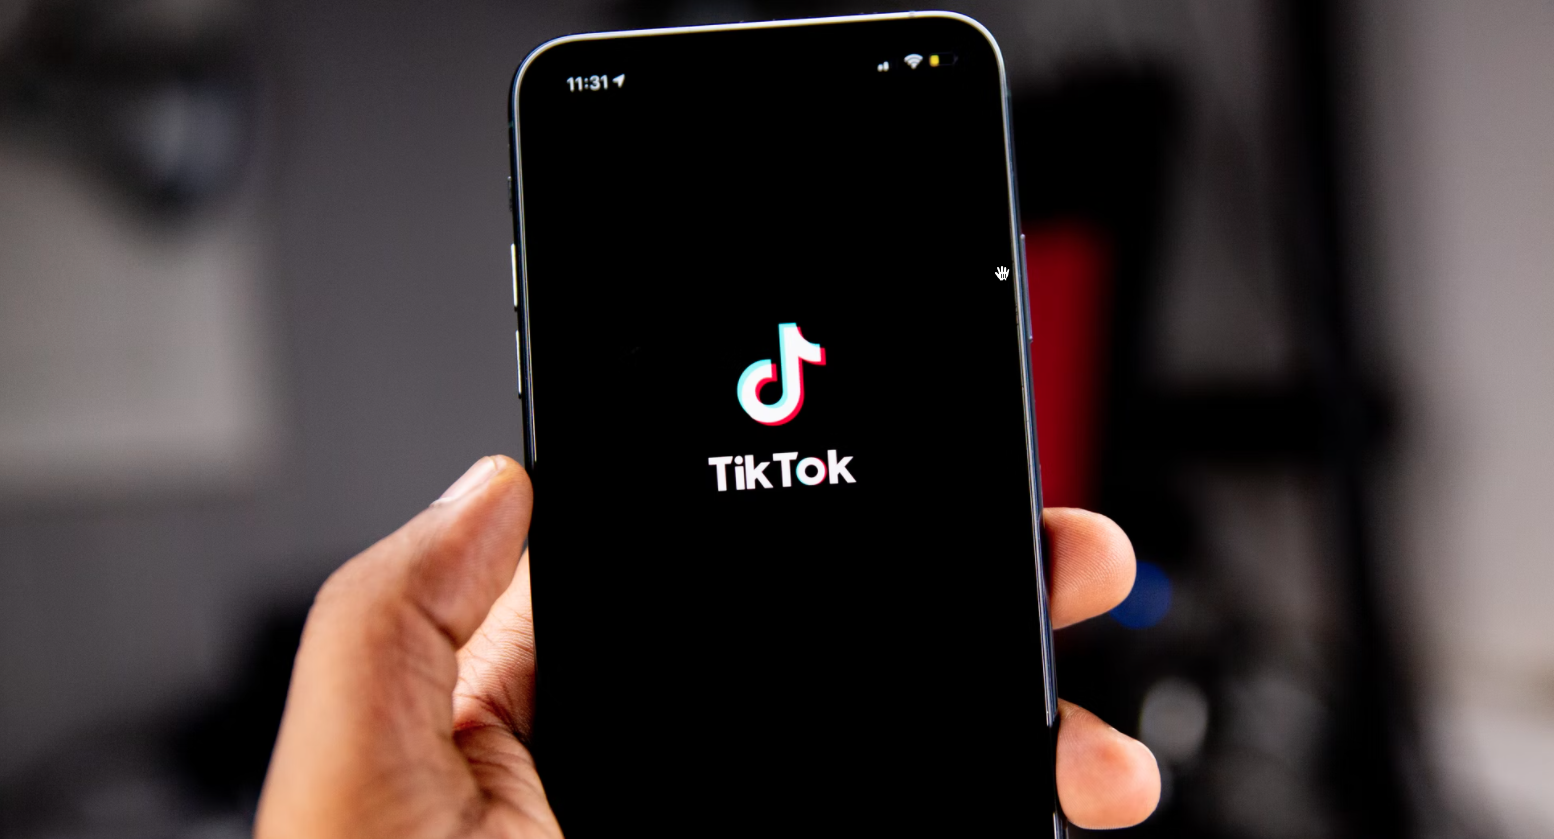 Does TikTok notify if you share or save TikTok videos?